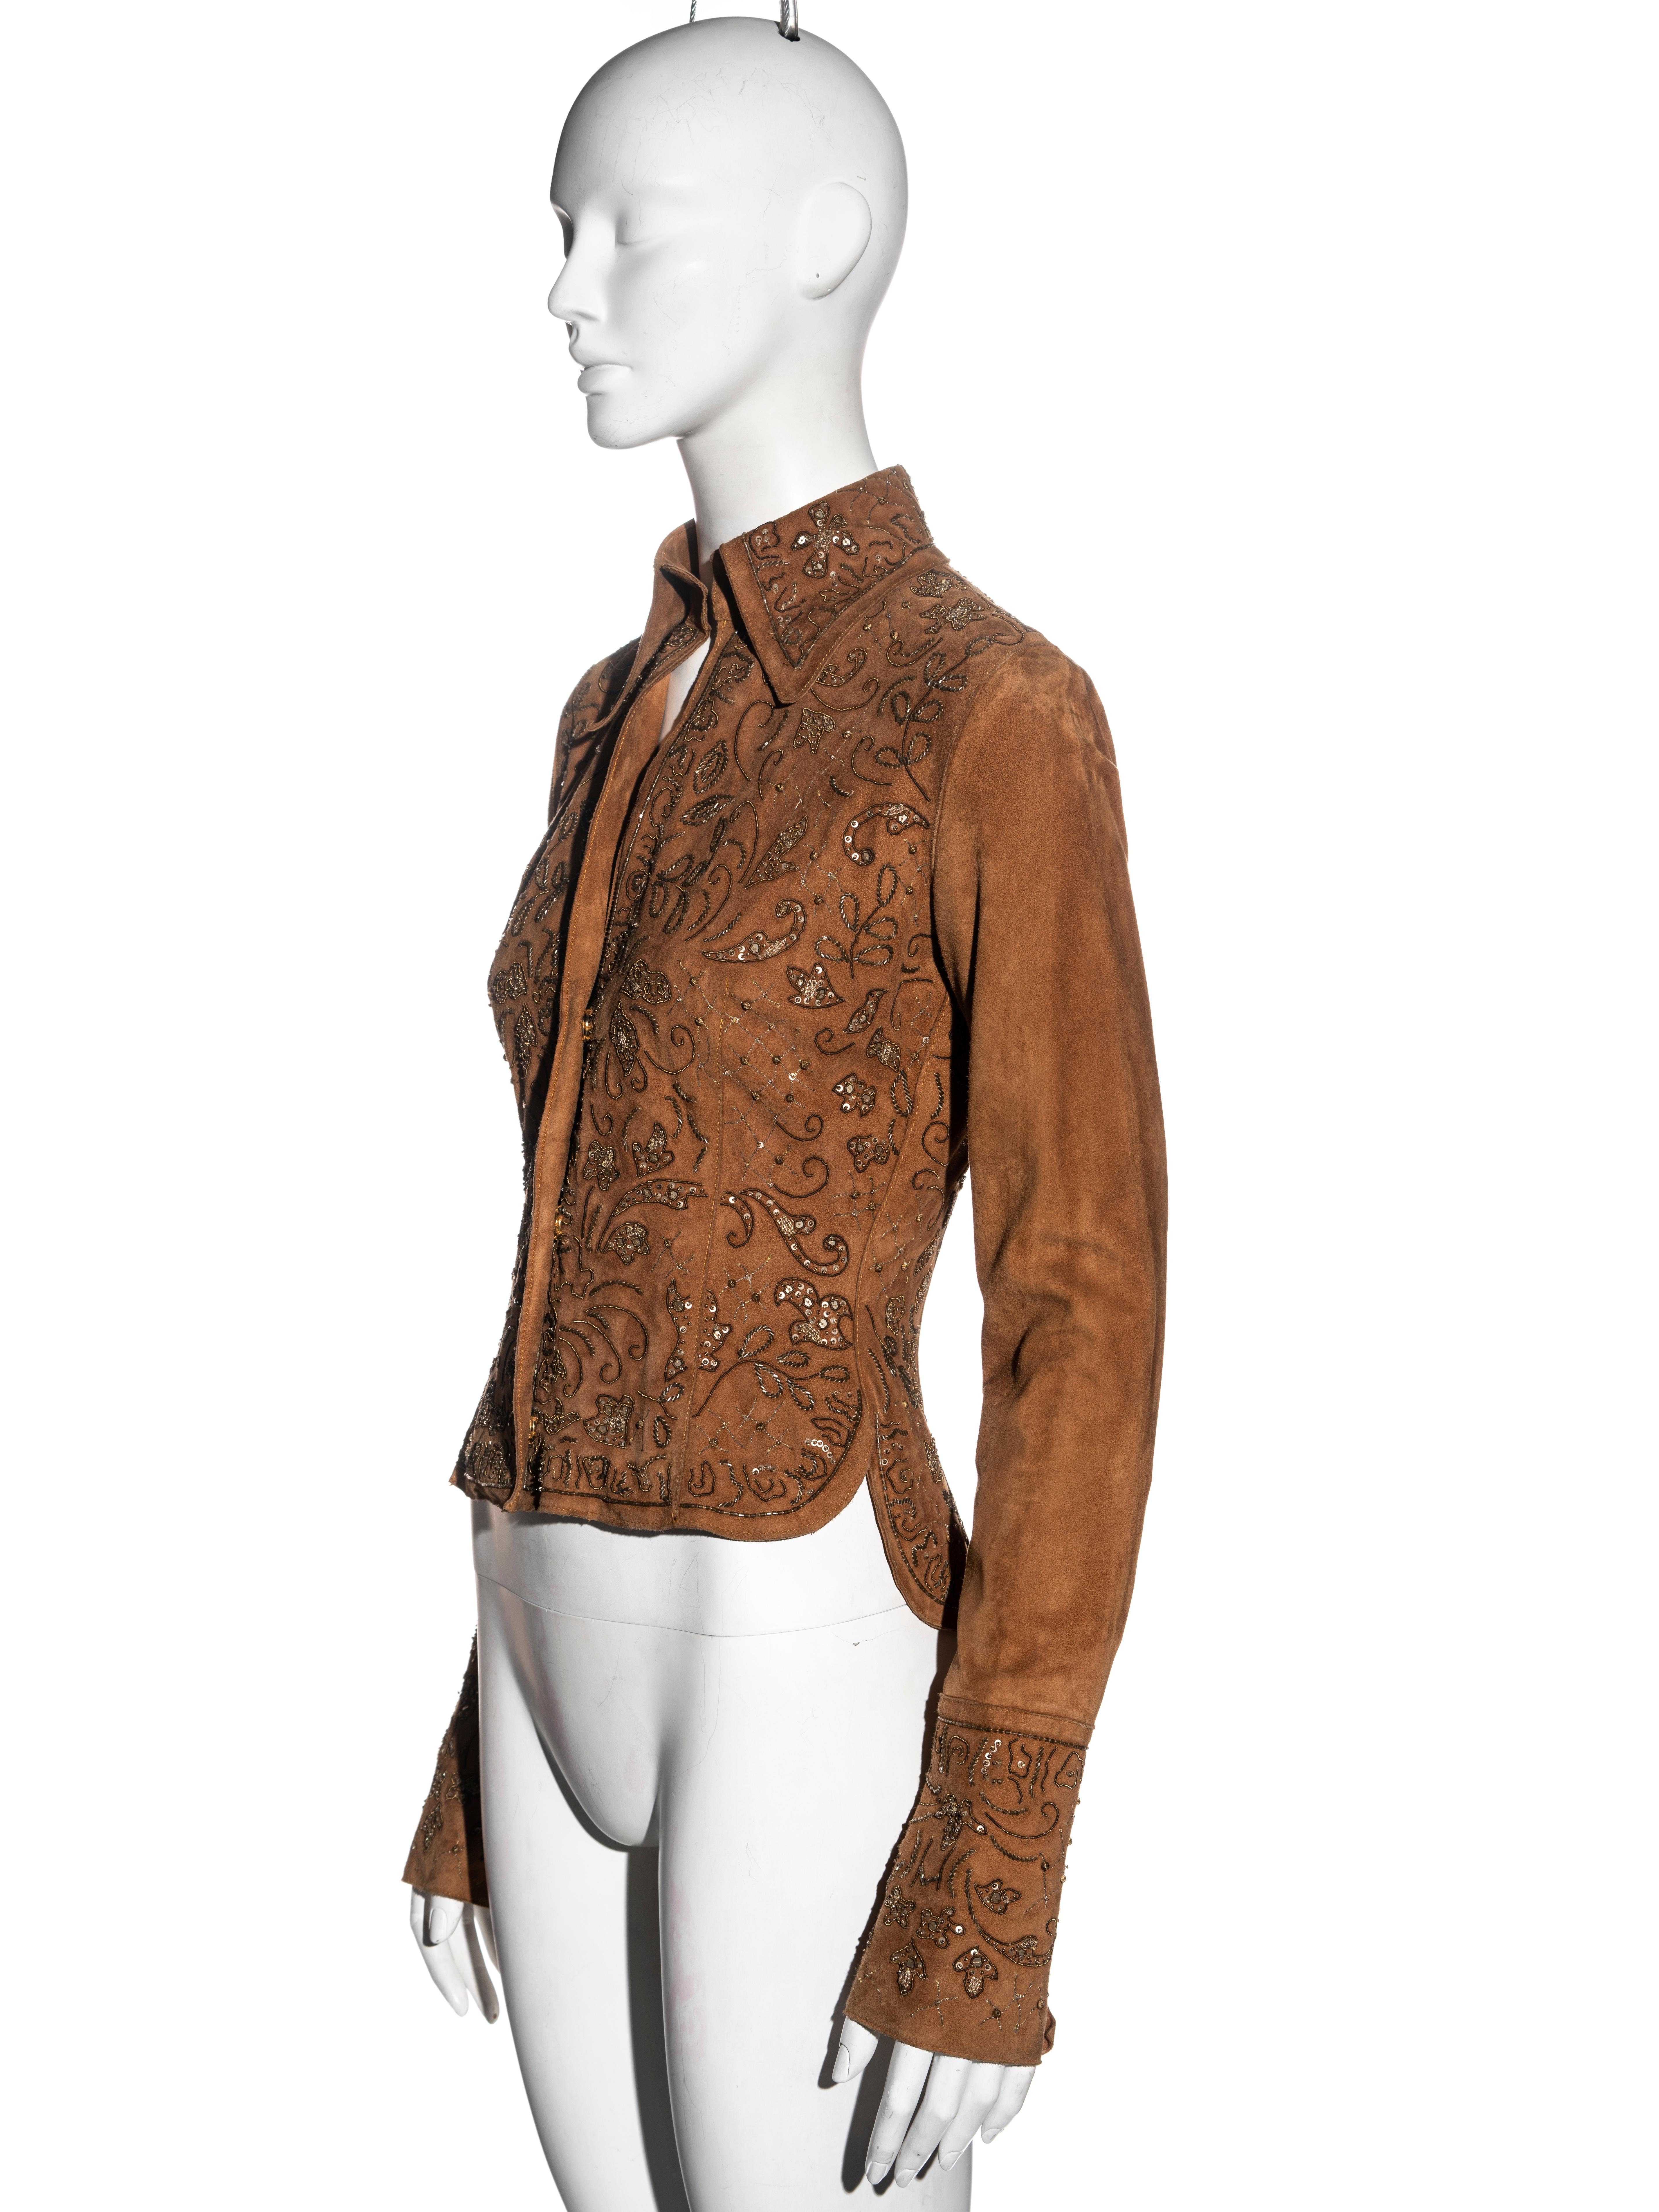 Dolce & Gabbana brown goat suede embellished shirt, ss 2001 For Sale 1